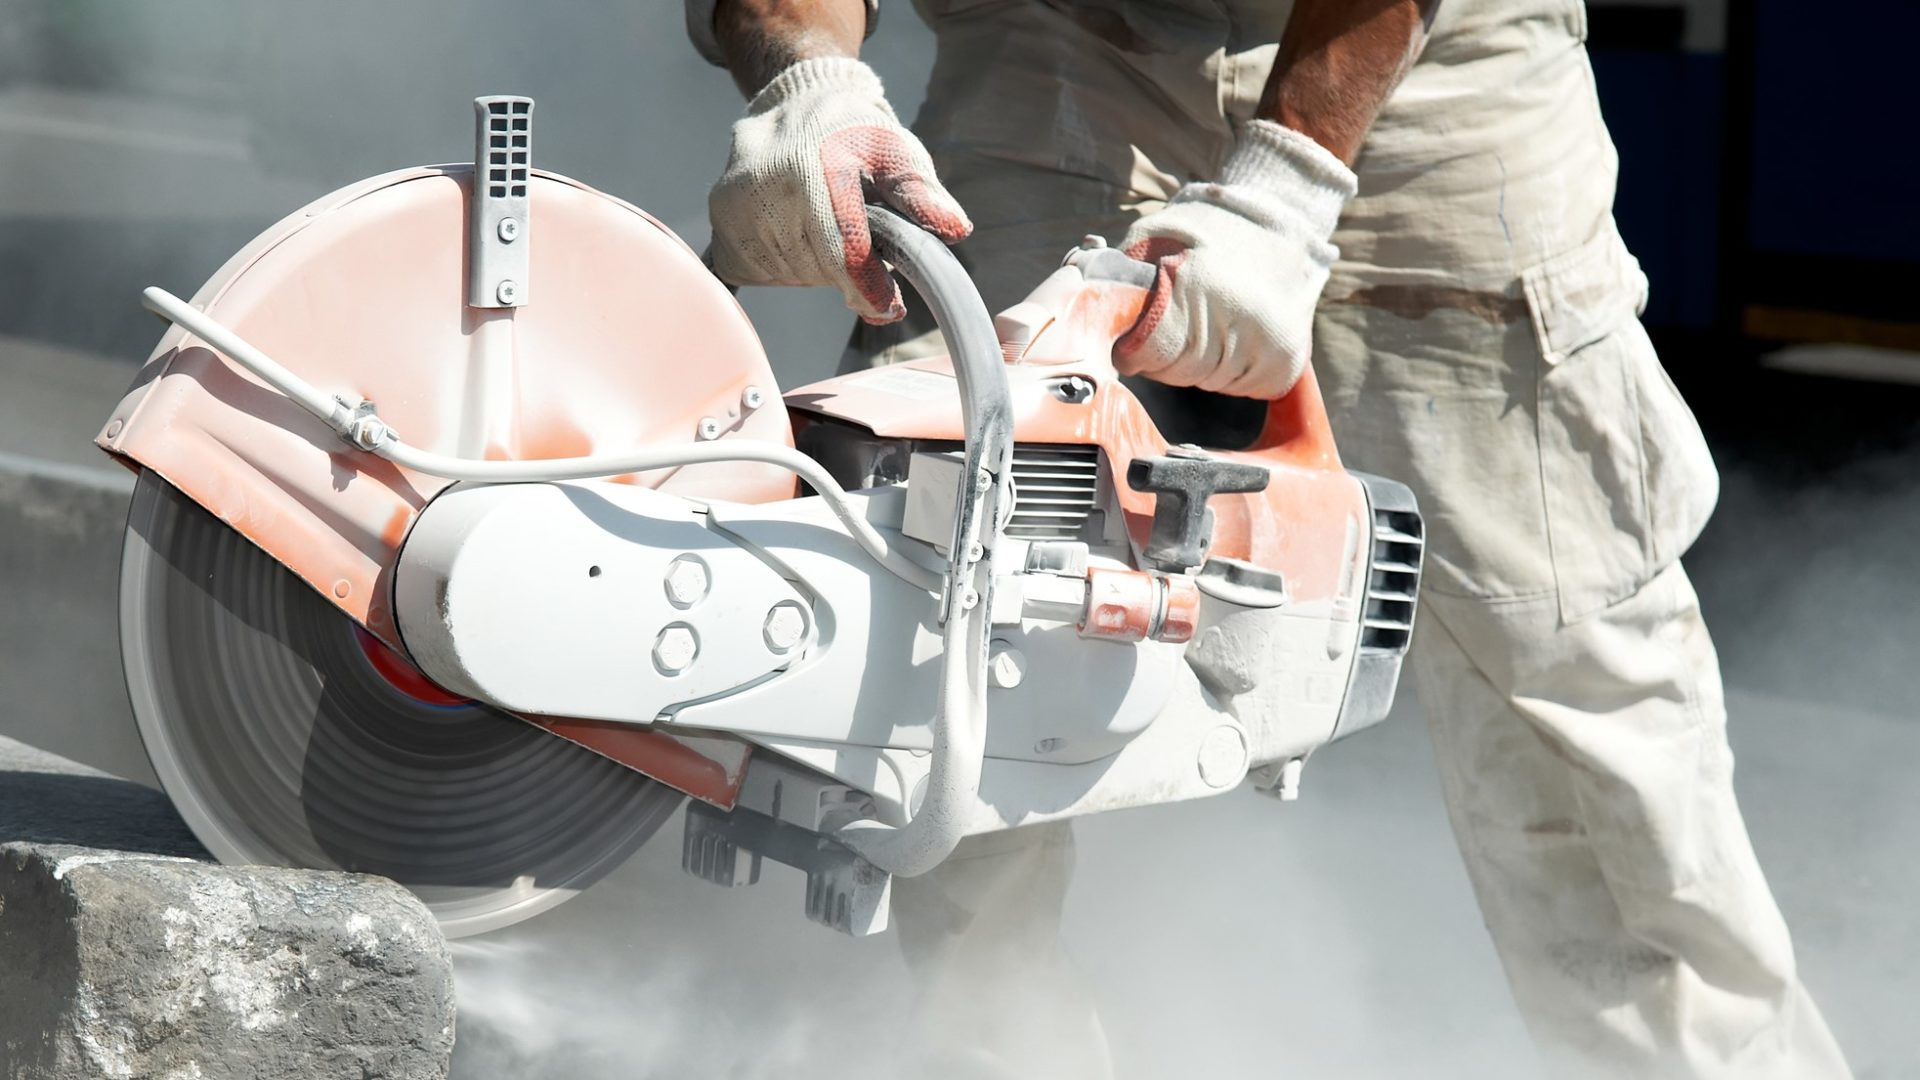 safety net zero - Construction dust safety risks refurbishment (image: Dreamstime)